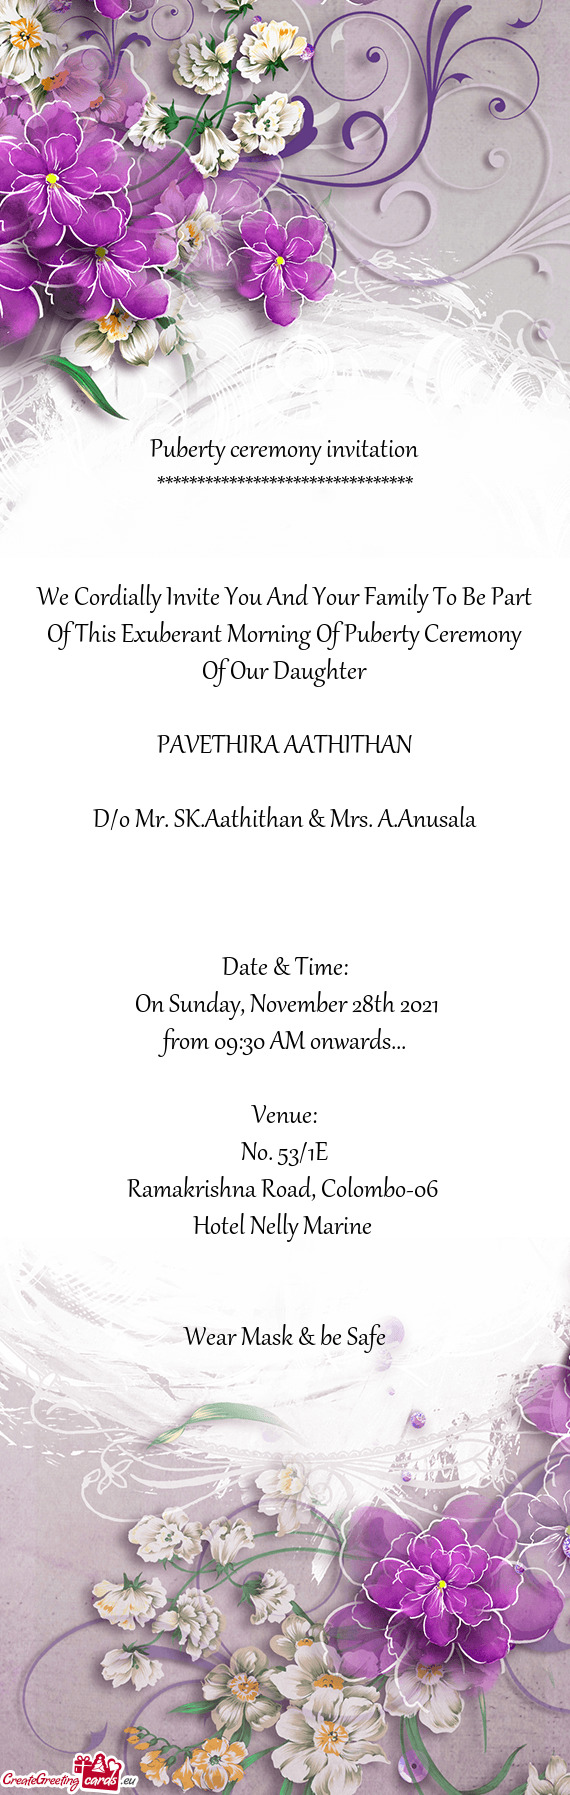 D/o Mr. SK.Aathithan & Mrs. A.Anusala